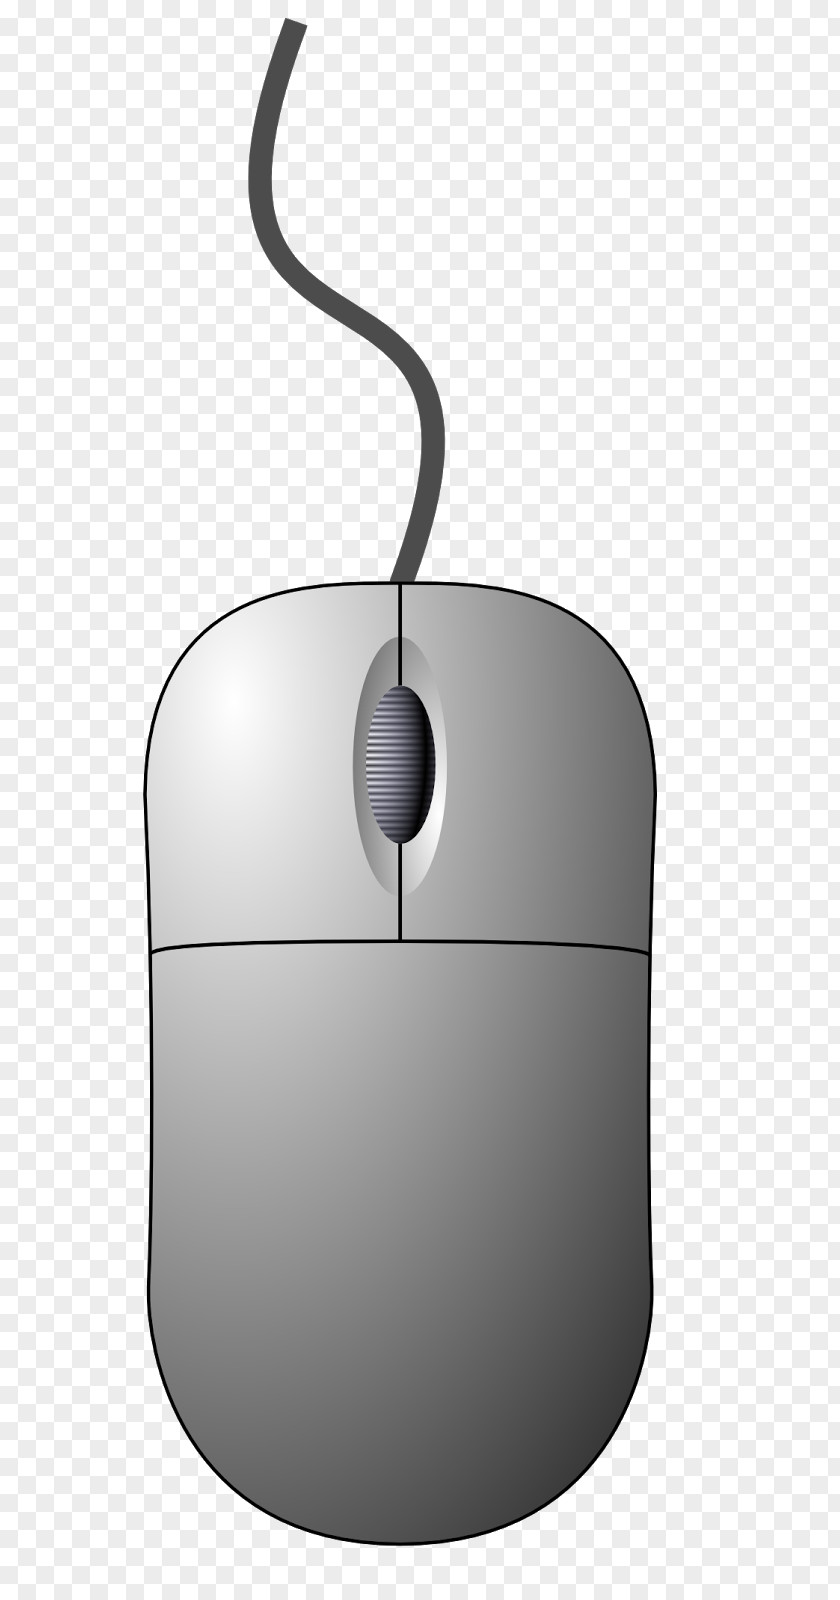 Pc Mouse Computer Pointer Clip Art PNG